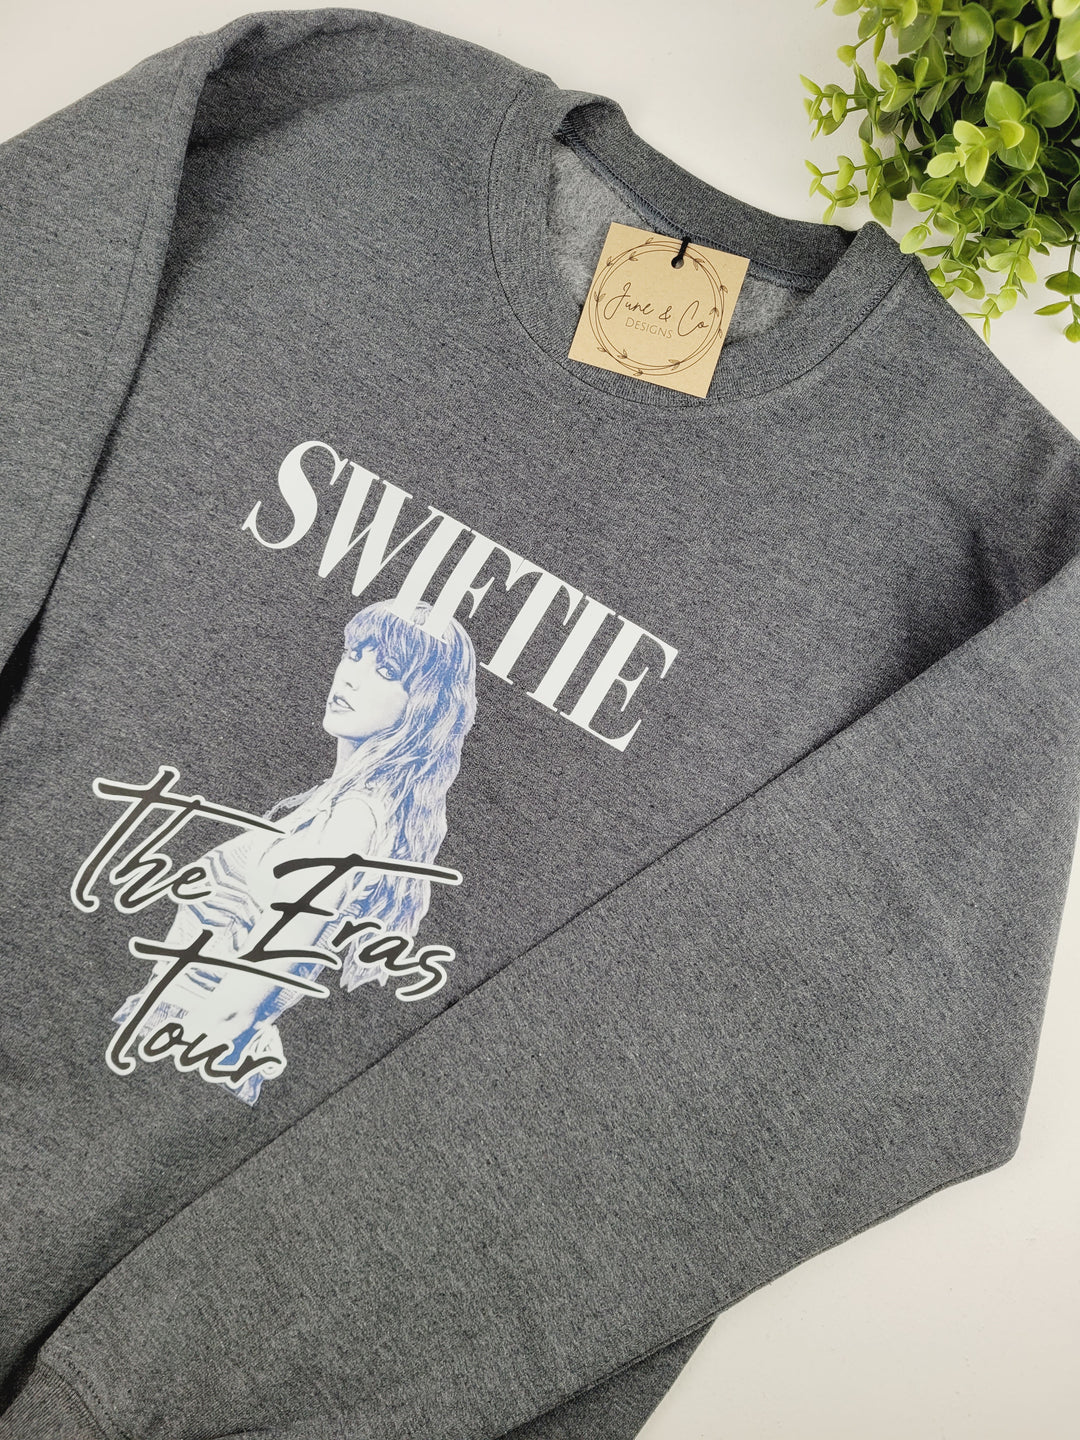 June & Co Designs, Swiftie The Eras Tour Grey Crewneck Sweaters